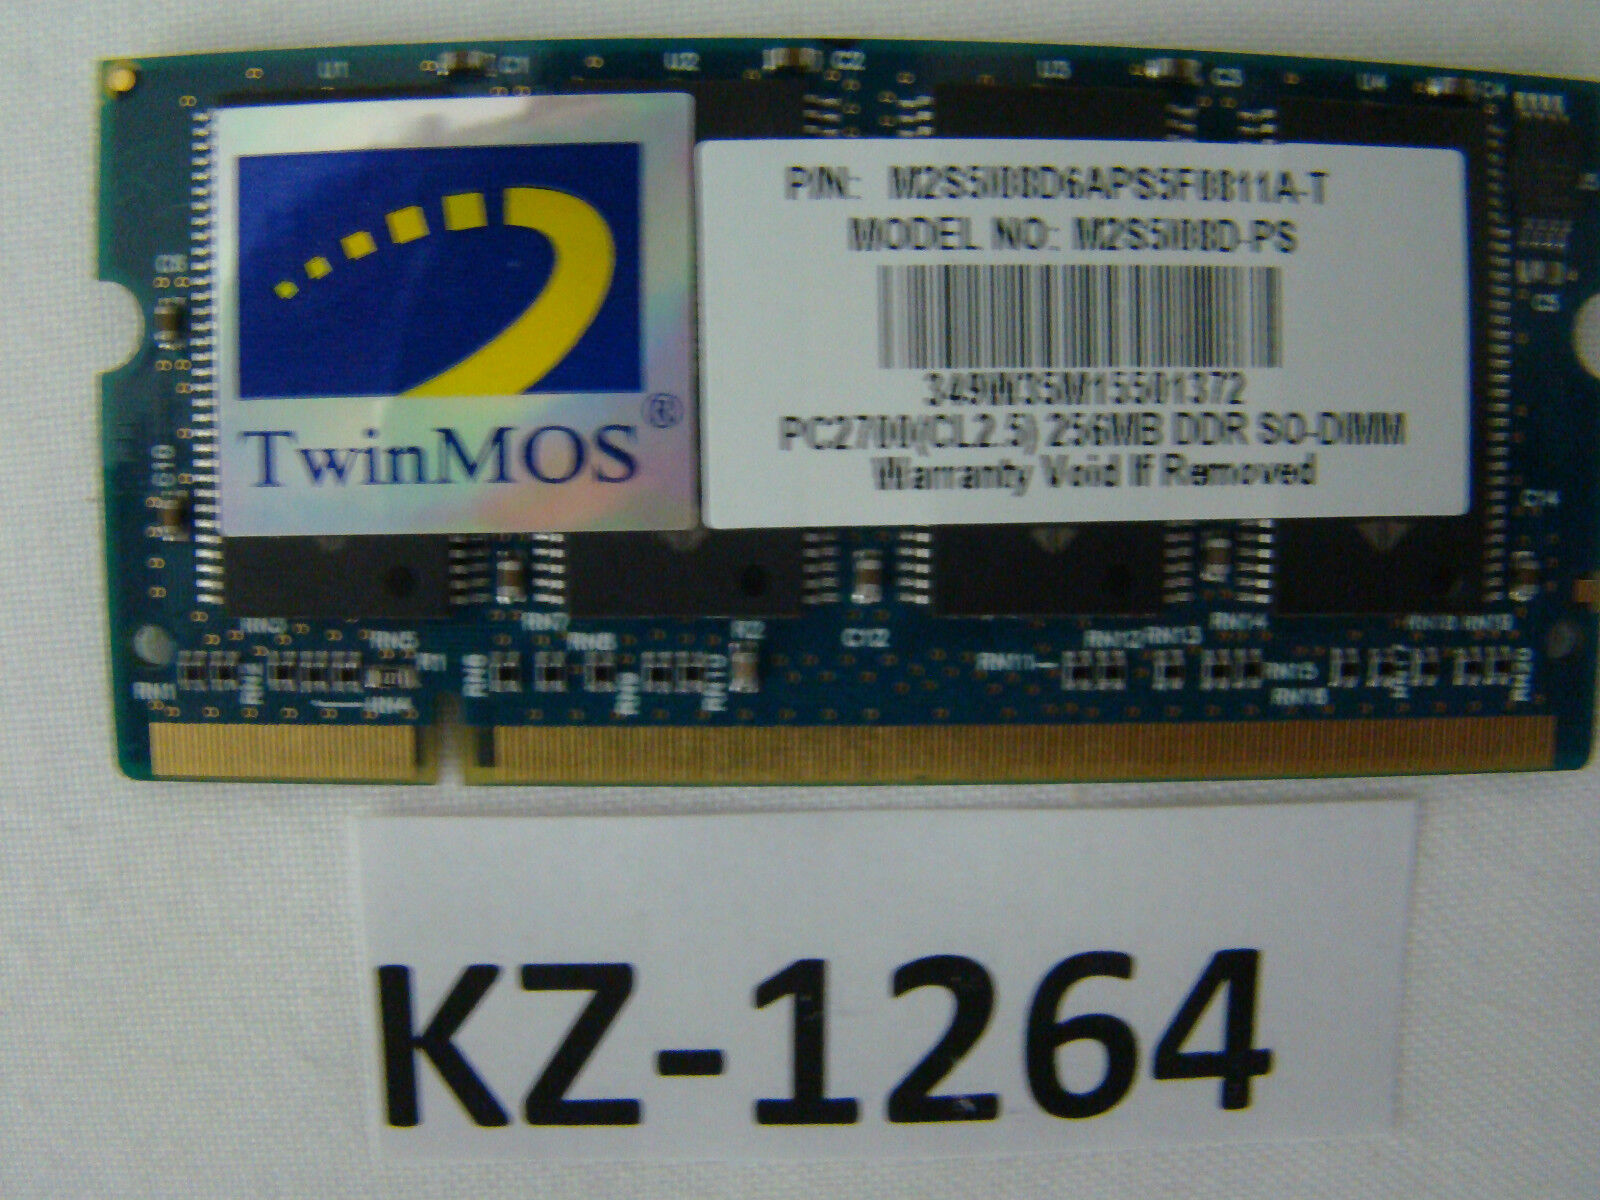 TwinMOS M2S9I08D-PS 256MB 200-pins SO-DIMMPC2700 DDR1 333MHZ #KZ-1264